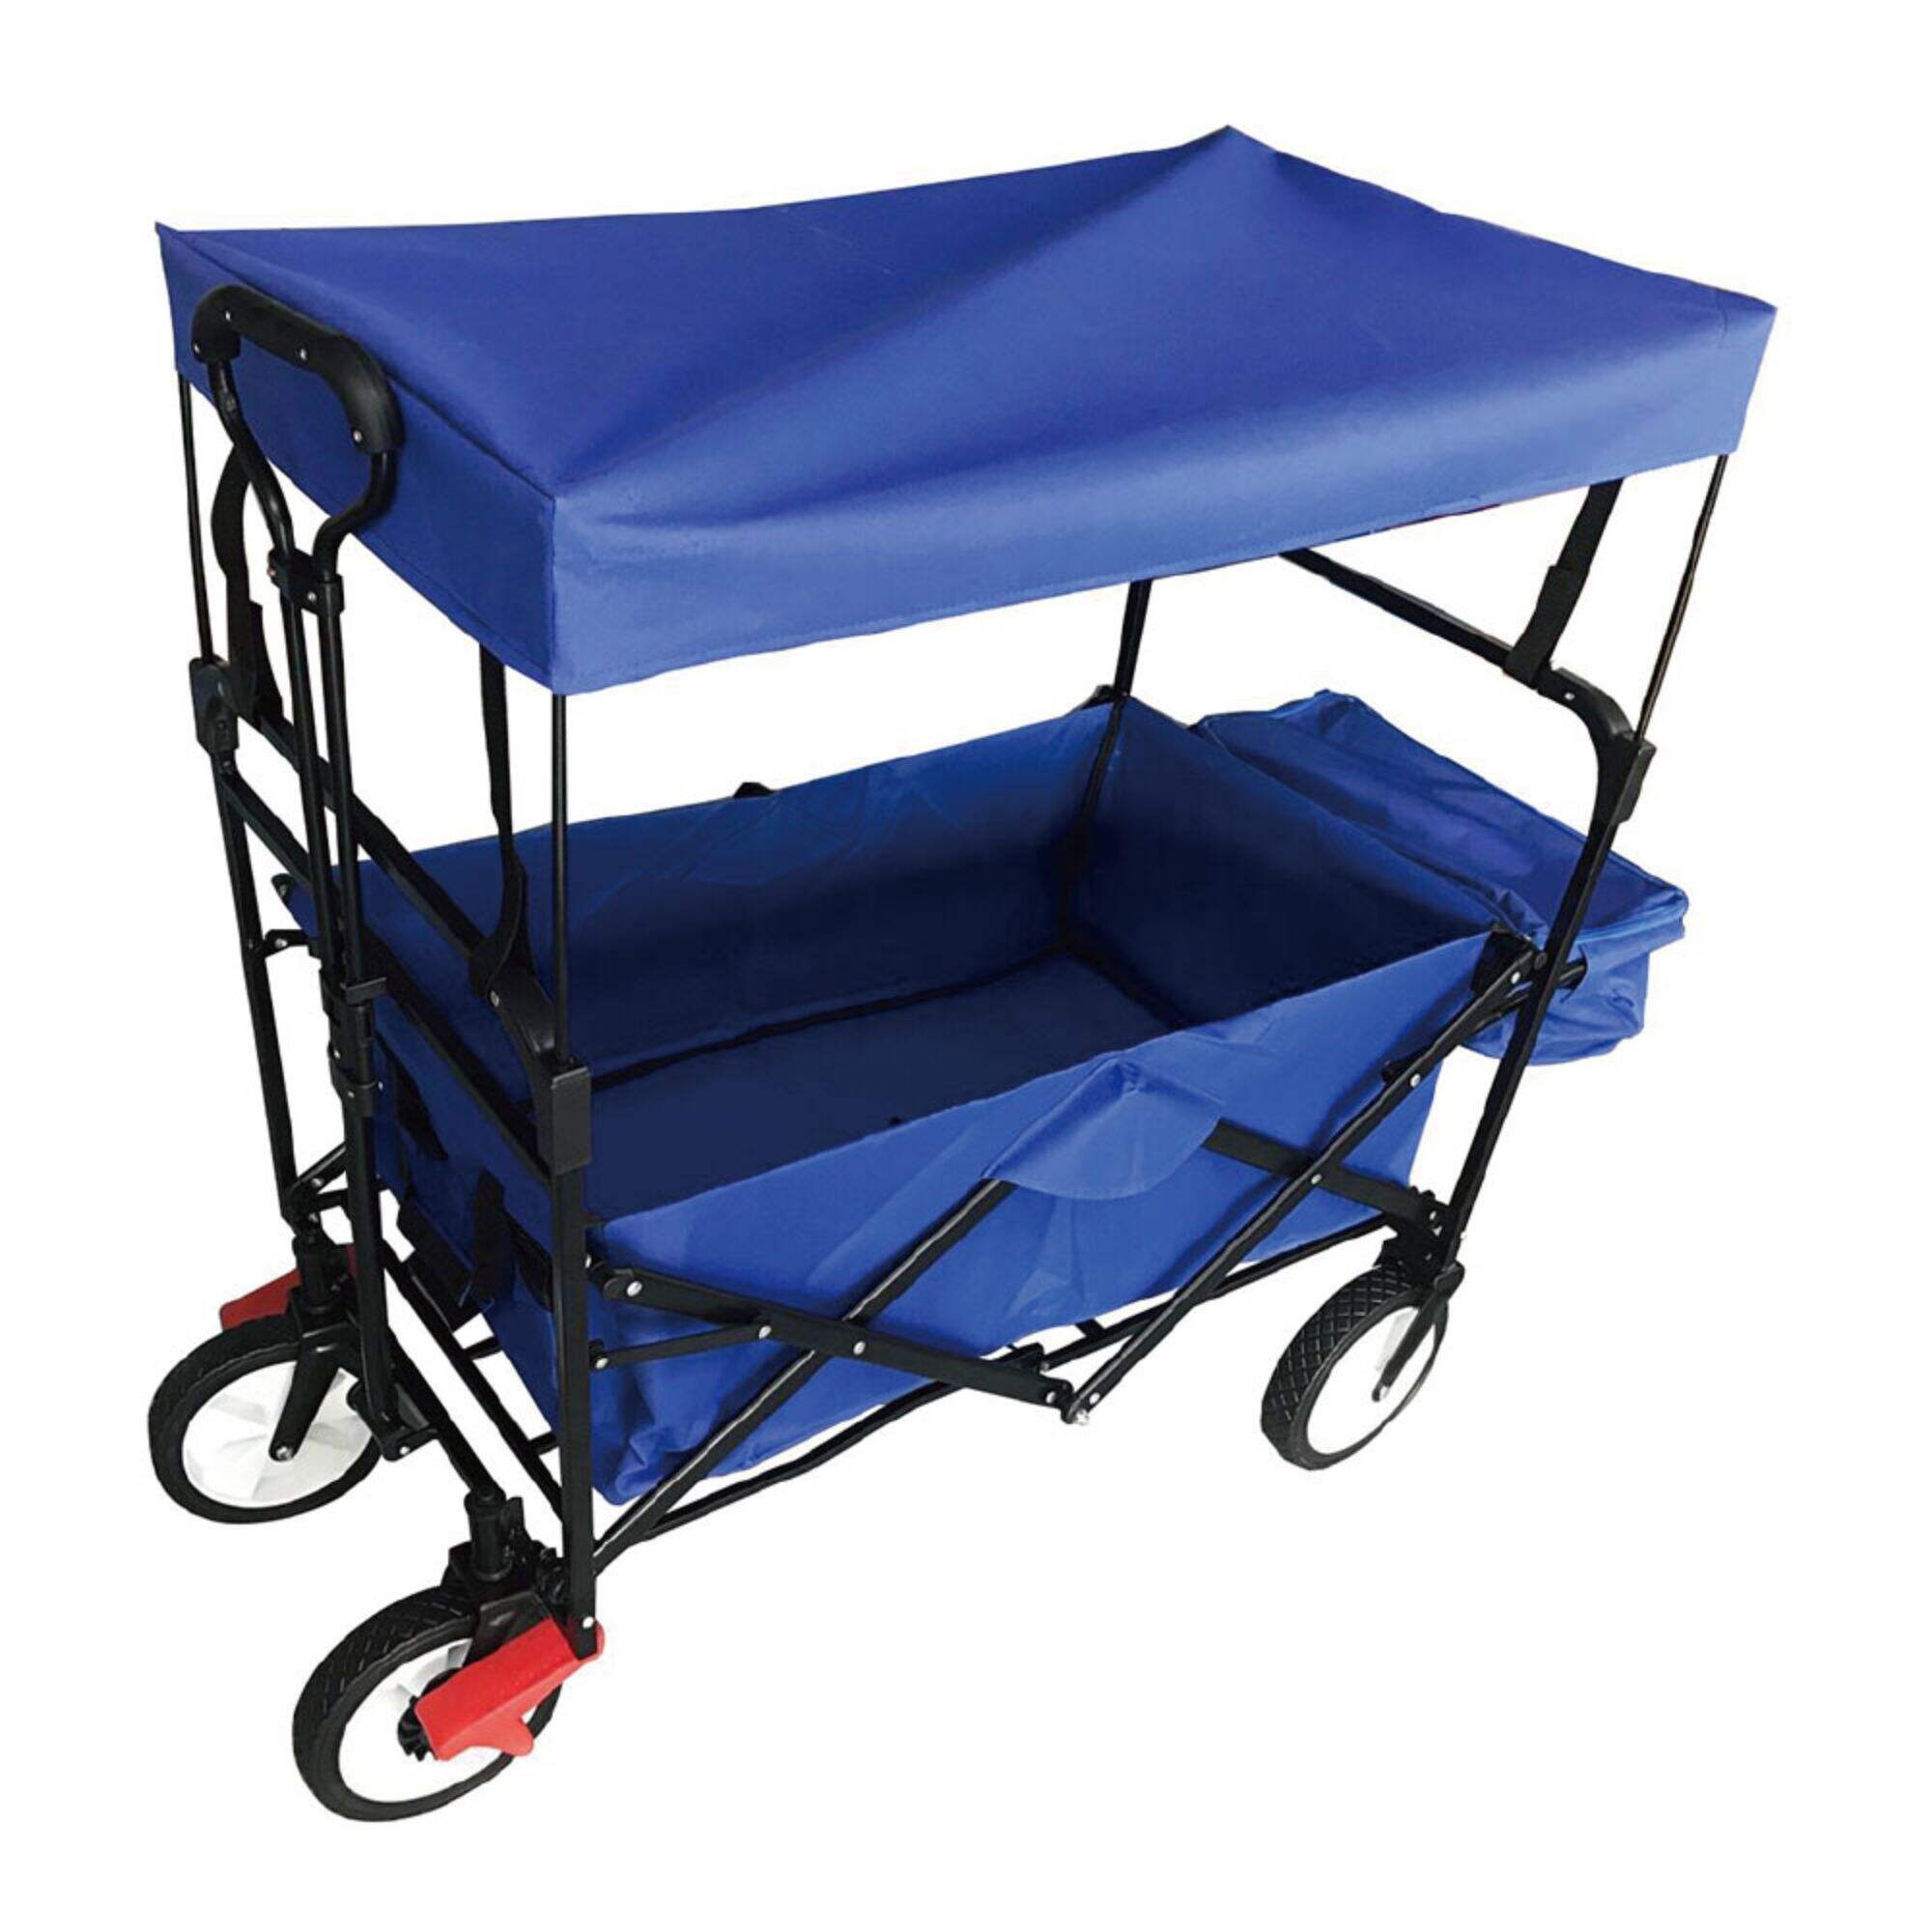 GT1804 Folding wagon, Foldable Utility Wagon Cart, for Camping Outdoor Garden